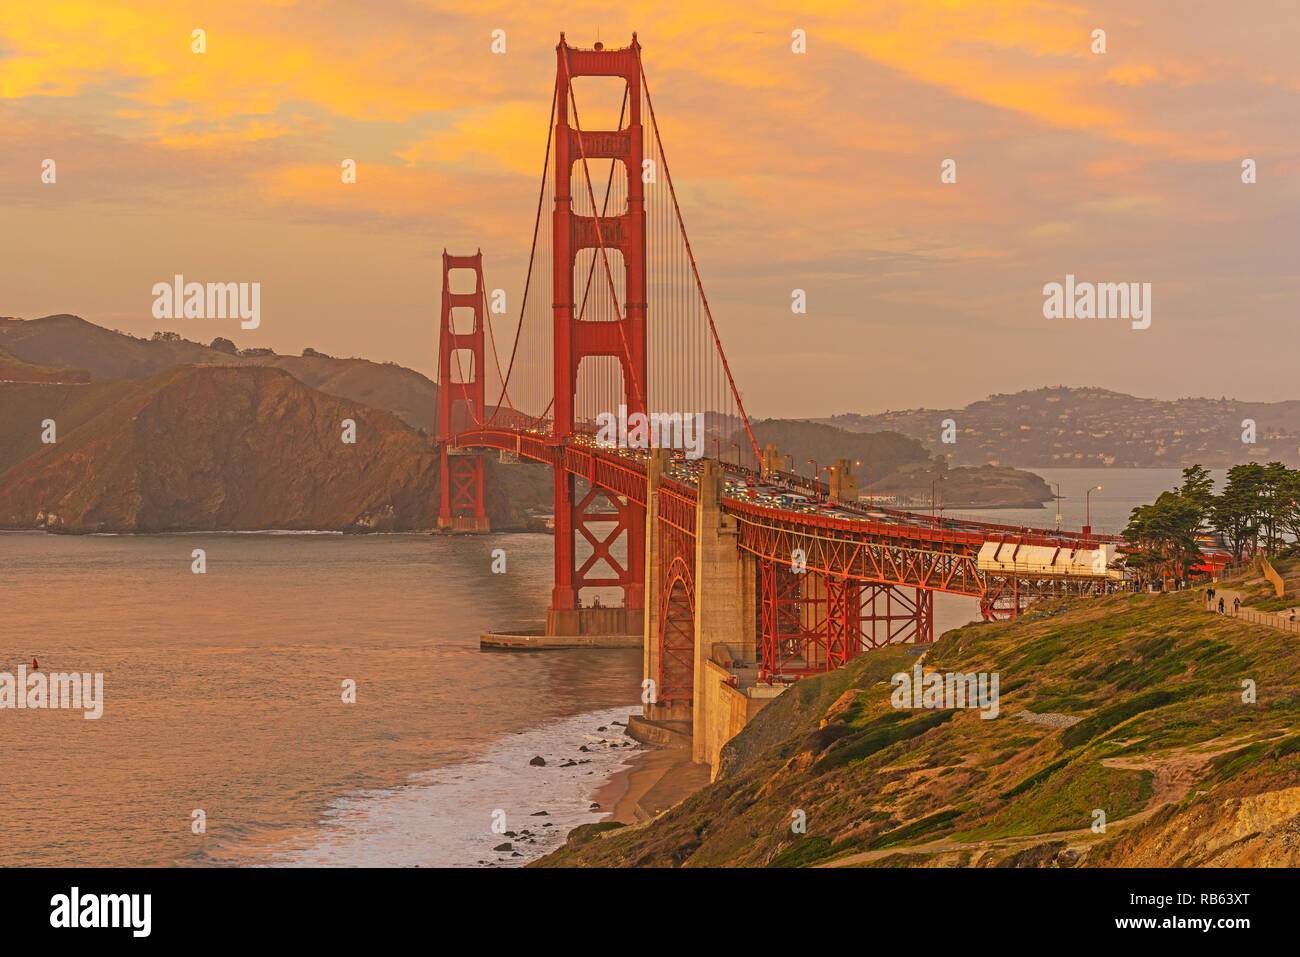 Sunset Golden Gate Bridge Southern California, epic golden gate bridge photos, San Francisco City Landscapes. Stock Photo